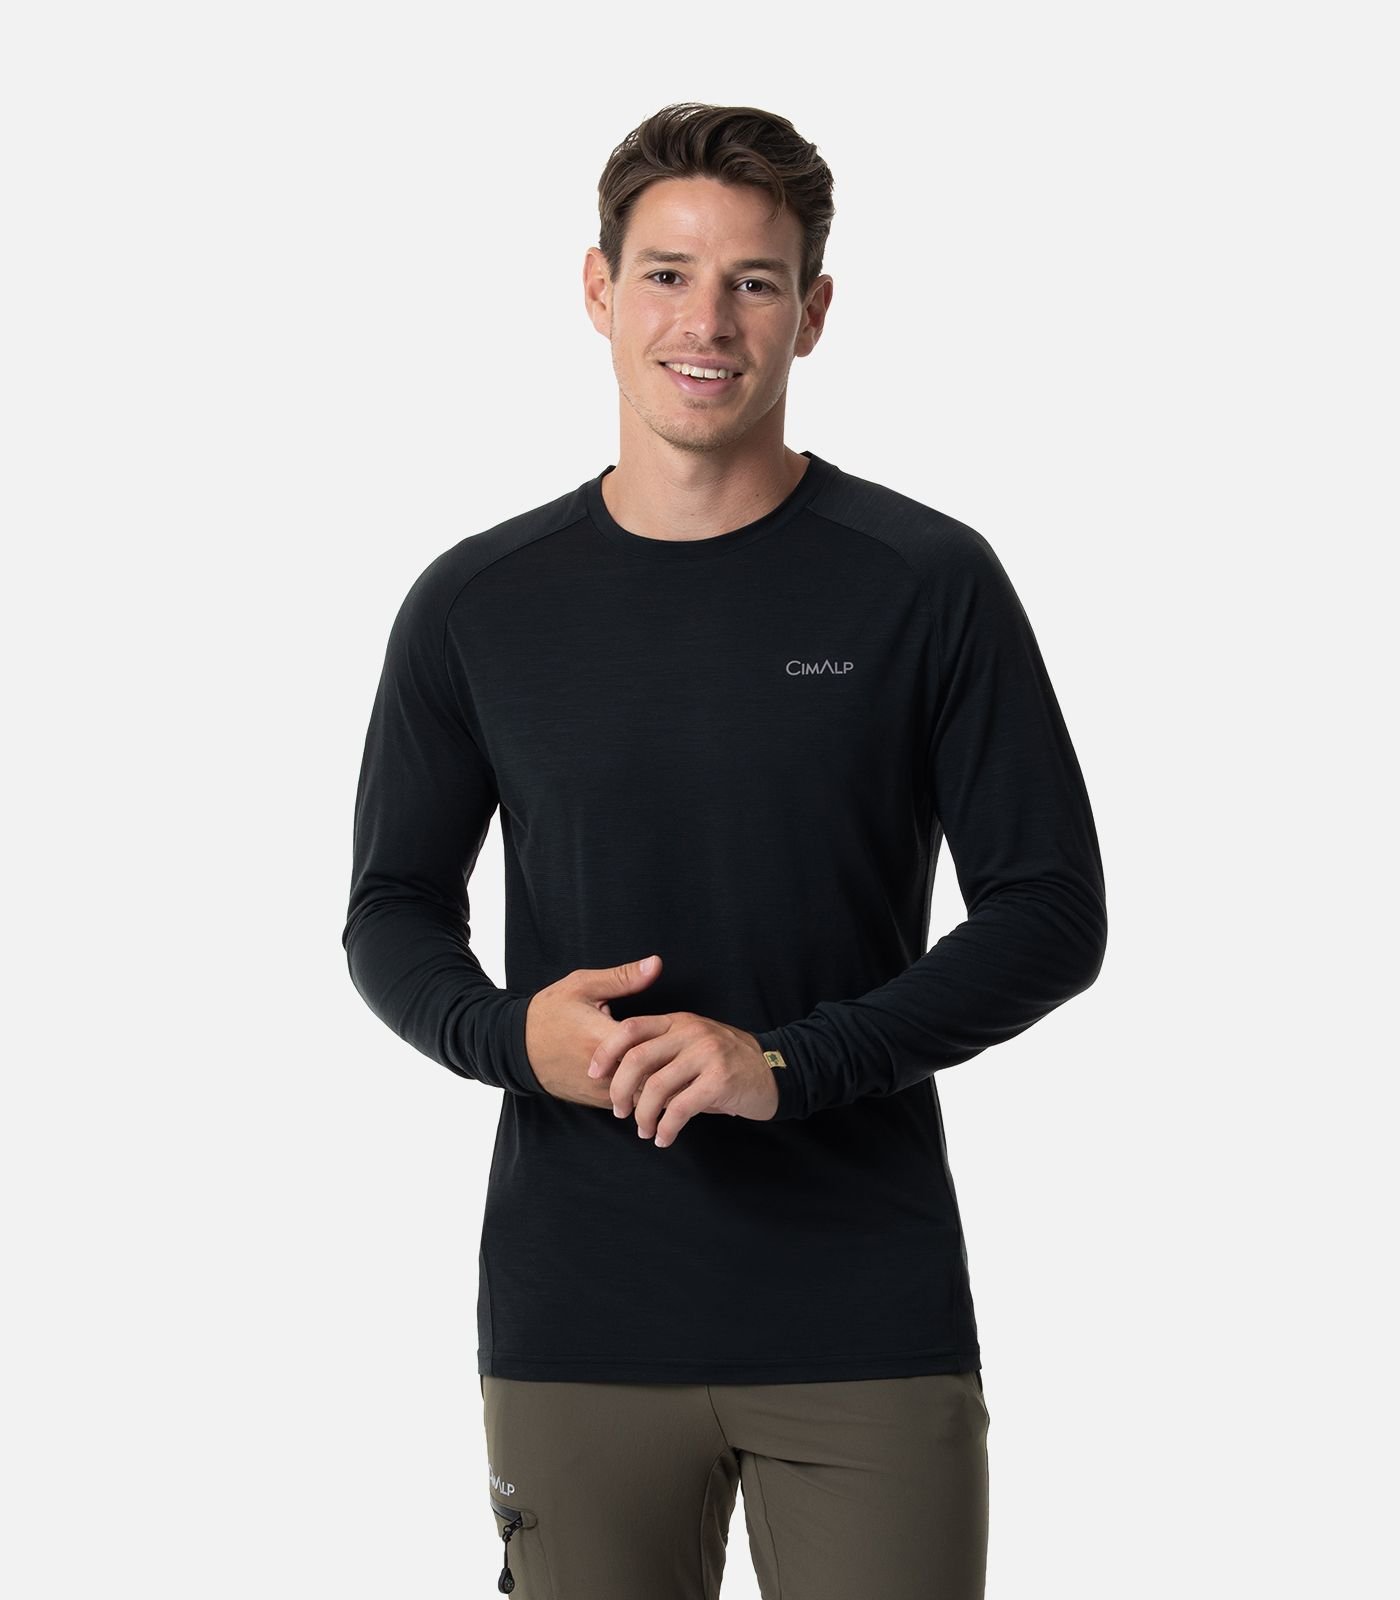 MERINO wool T-shirt - Long sleeves